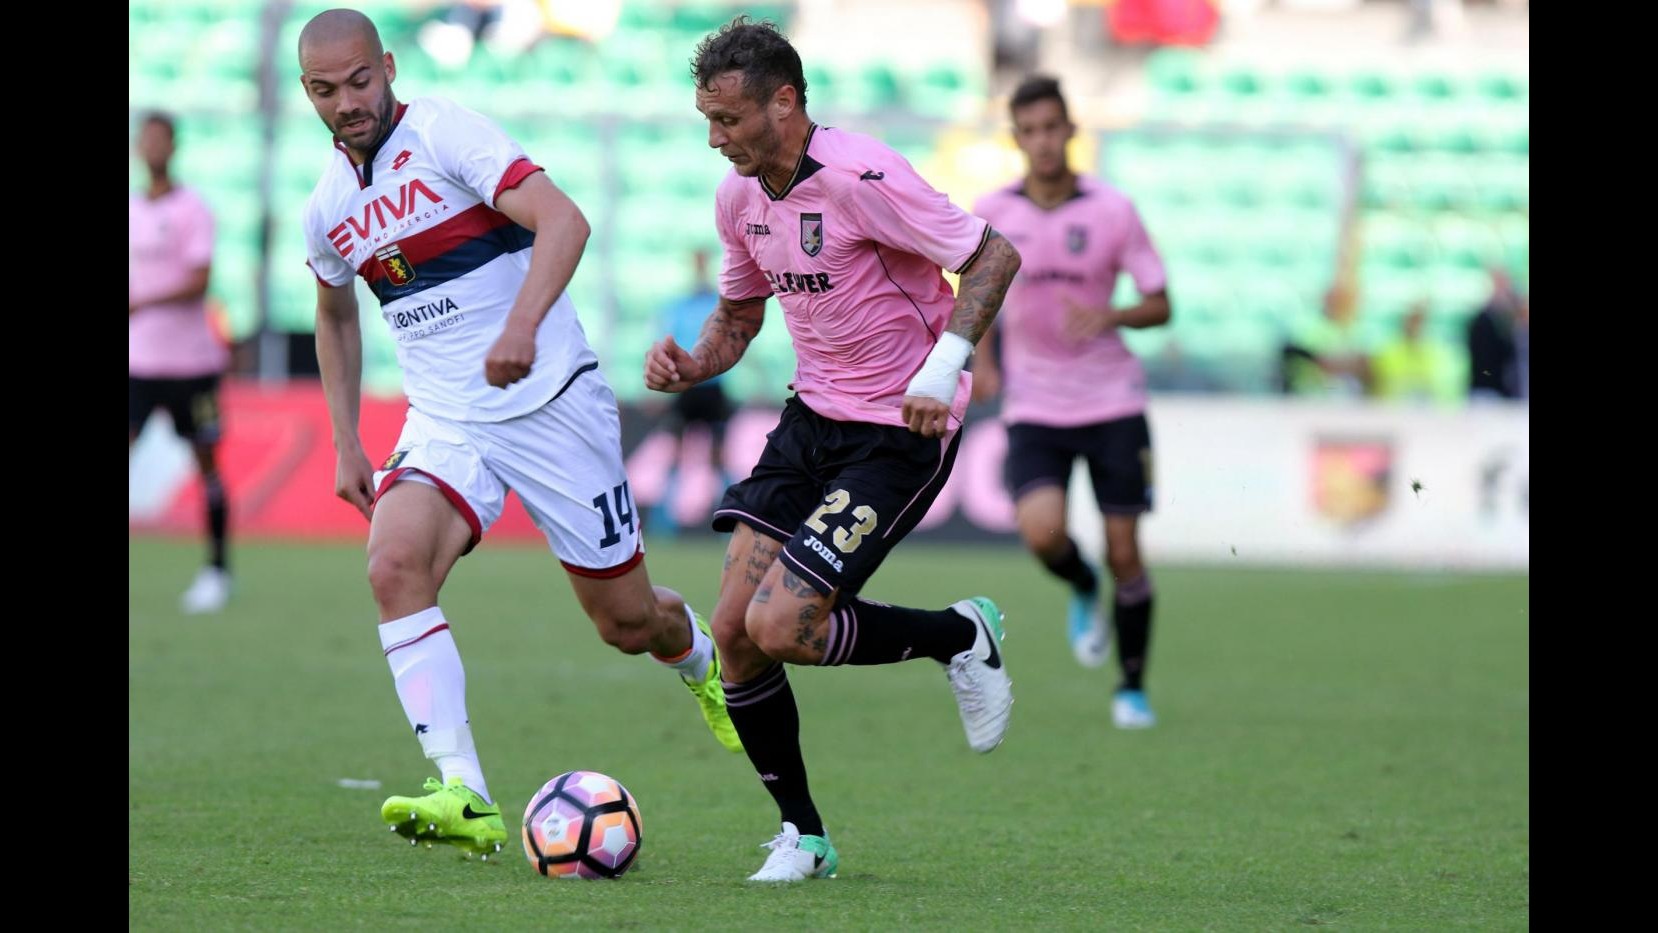 FOTO Serie A, Palermo batte Genoa 1-0